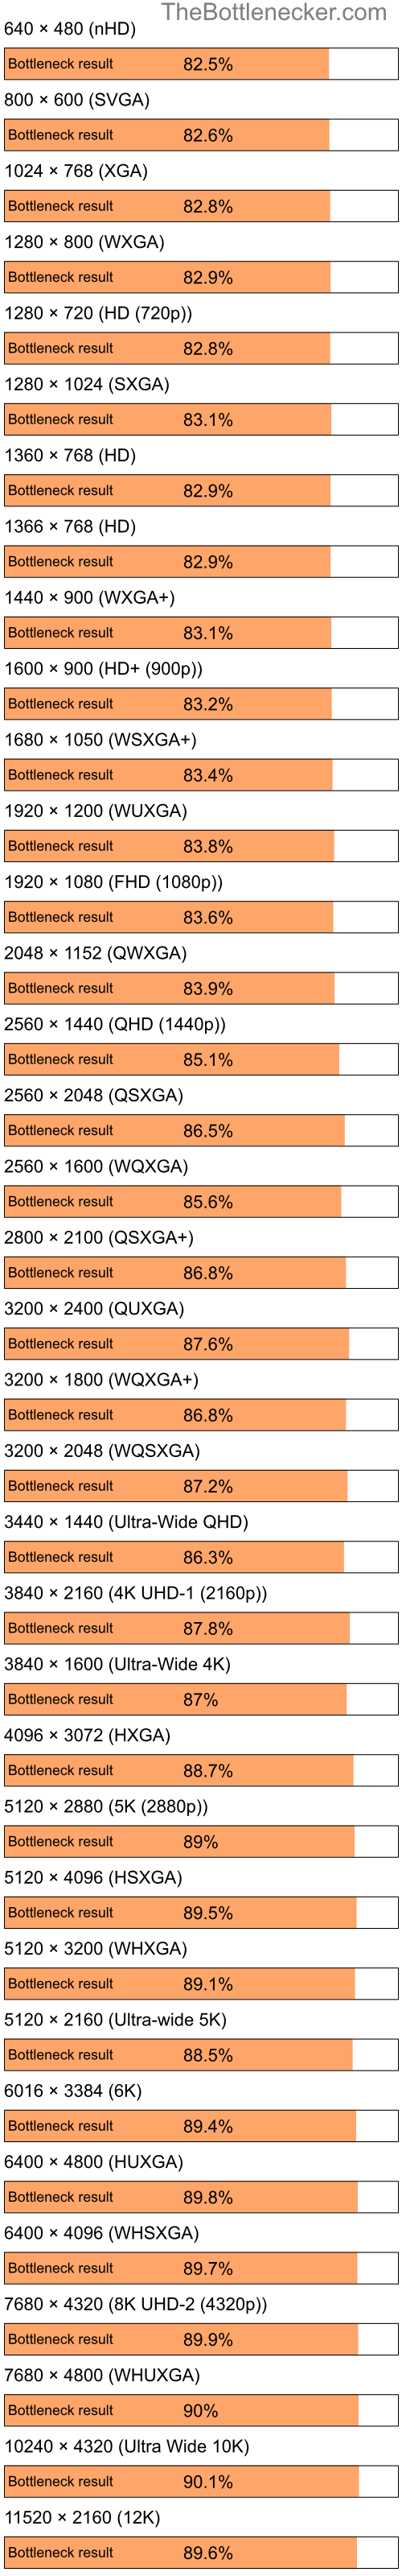 Bottleneck results by resolution for Intel Celeron and NVIDIA GeForce 6100 nForce 400 in Graphic Card Intense Tasks